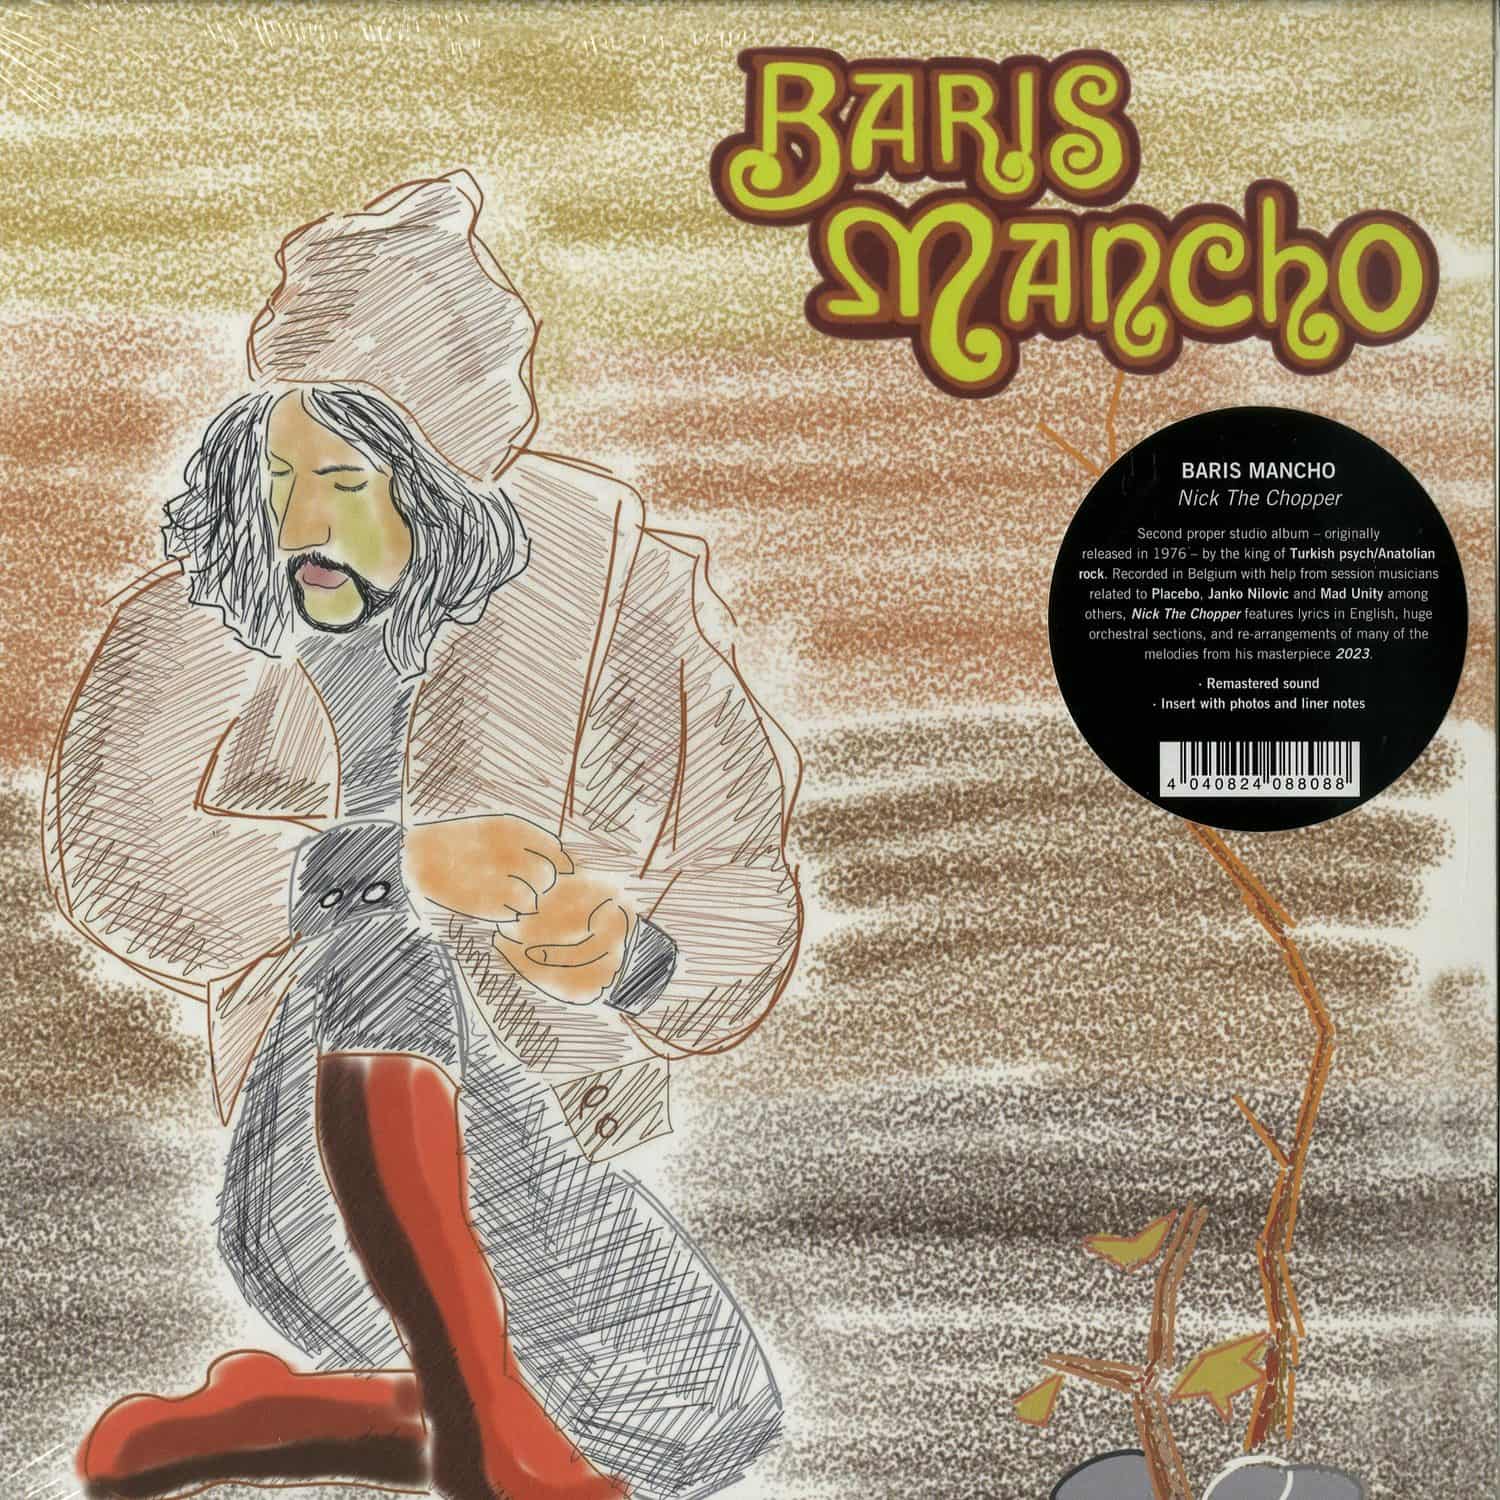 Baris Manco - NICK THE CHOPPER 